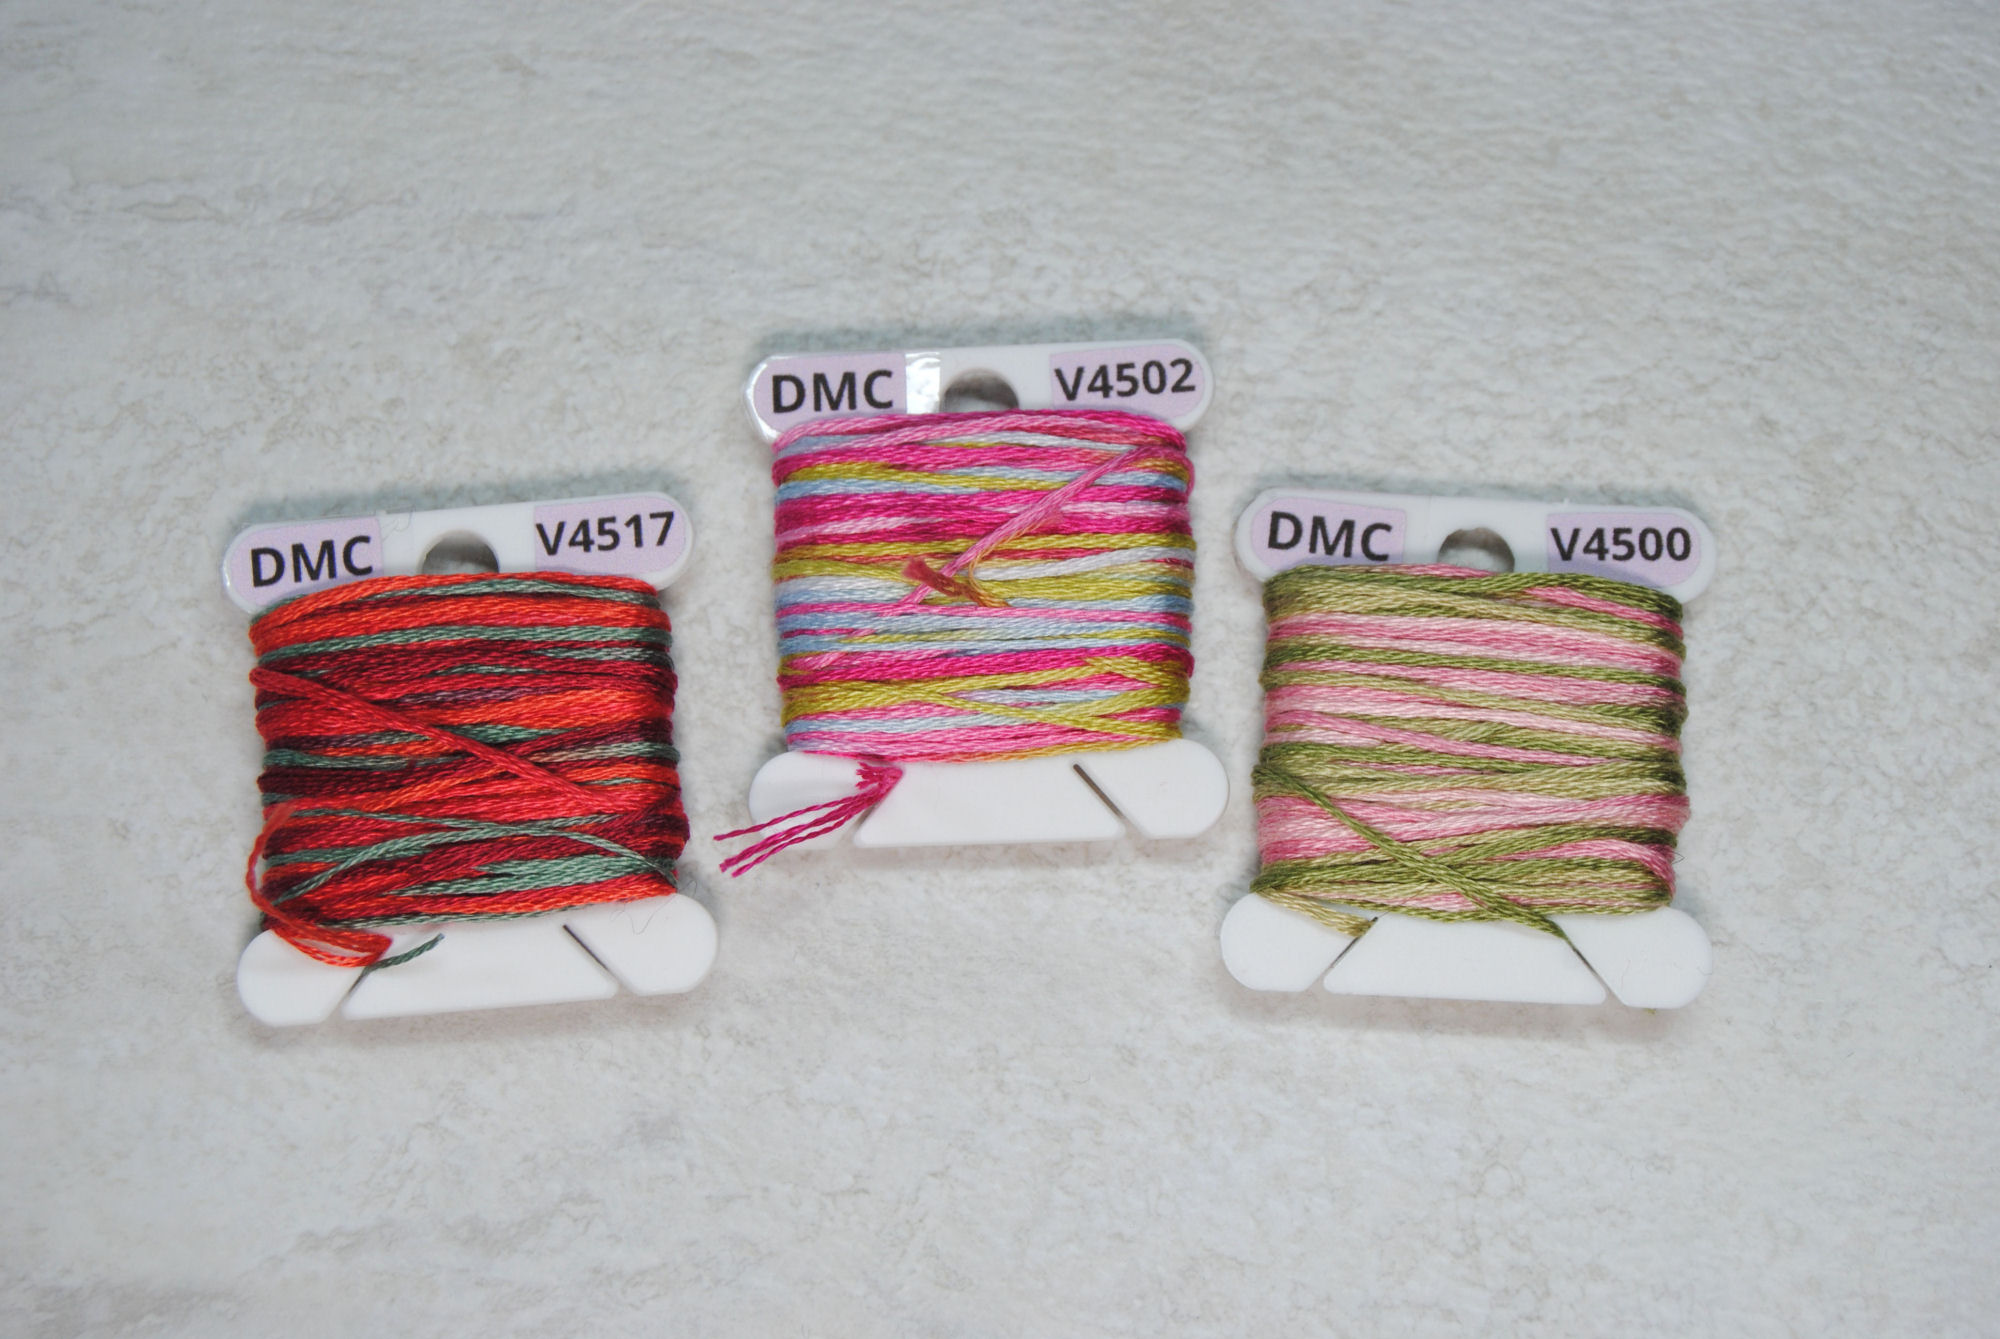 Color variations thread: using variegated floss like Coloris